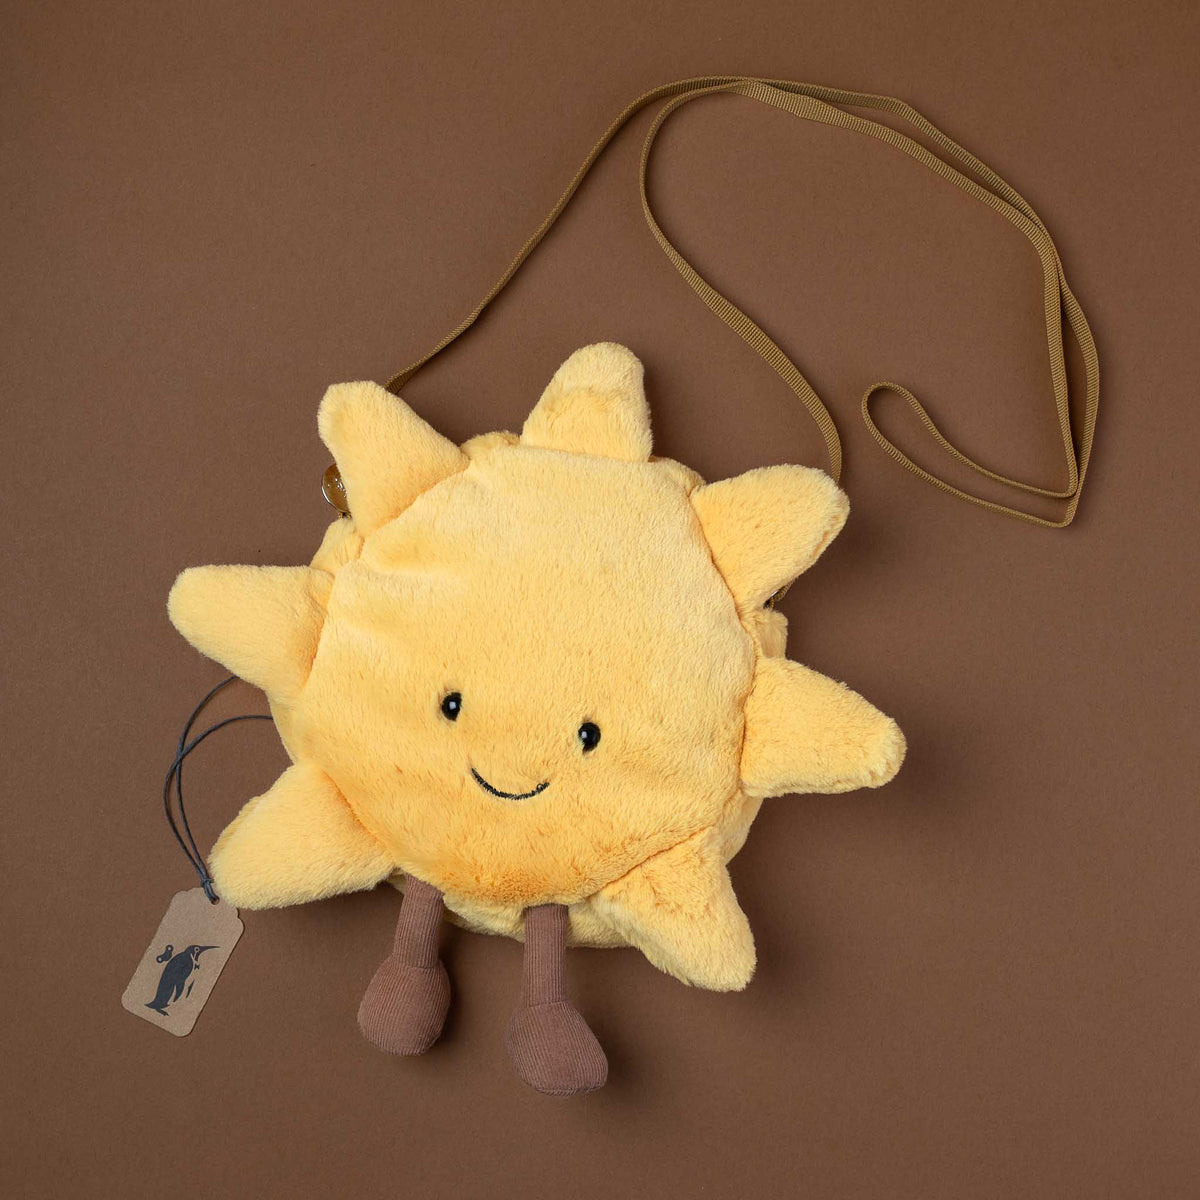 Jellycat Amuseable Sun Bag – Princess and the Pea